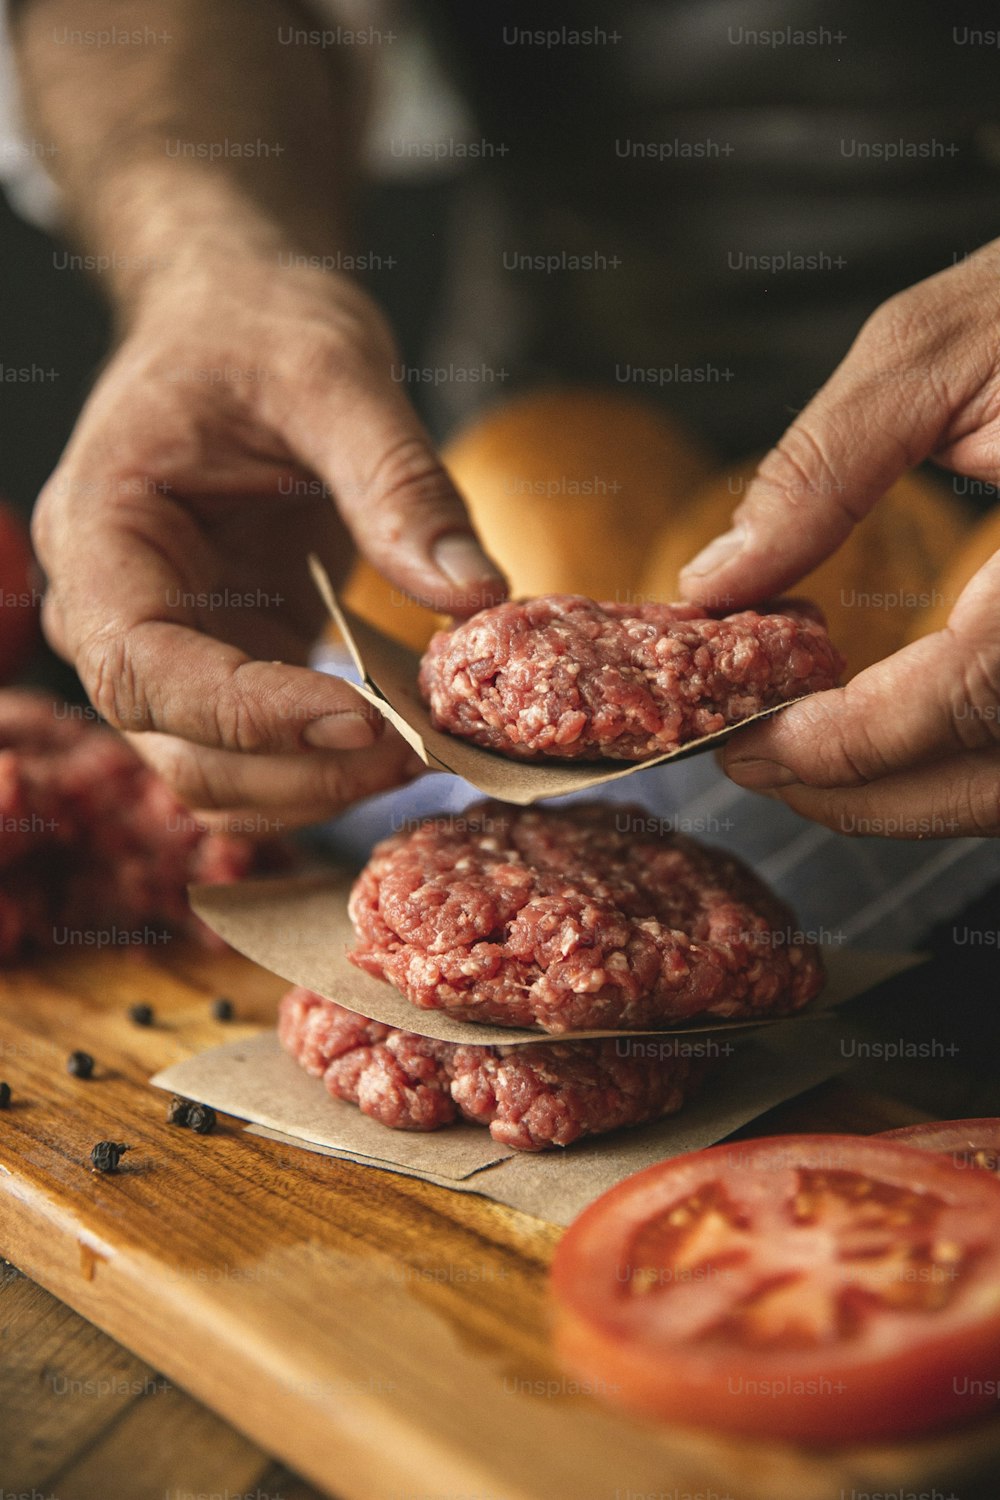 a person cutting up hamburger patties on a cutting board